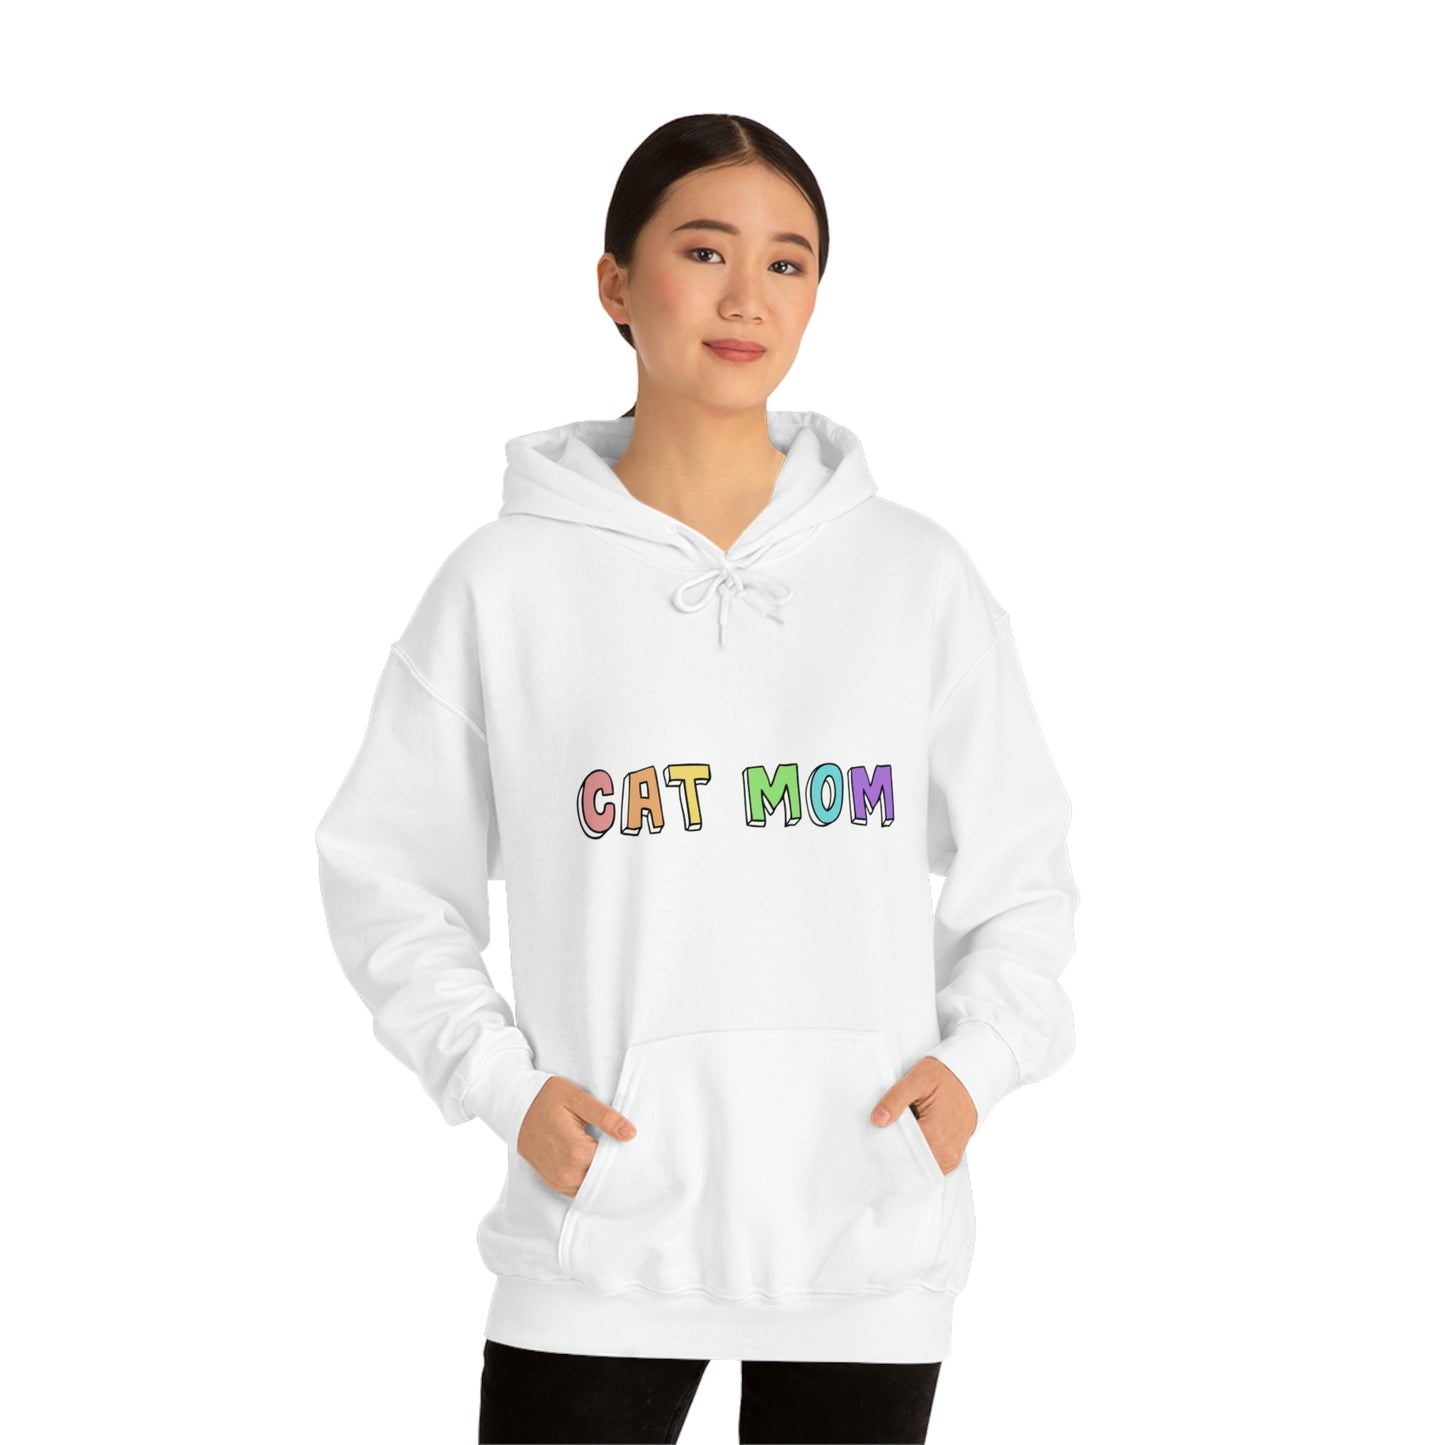 Cat Mom | Hooded Sweatshirt - Detezi Designs-26897209120183485281